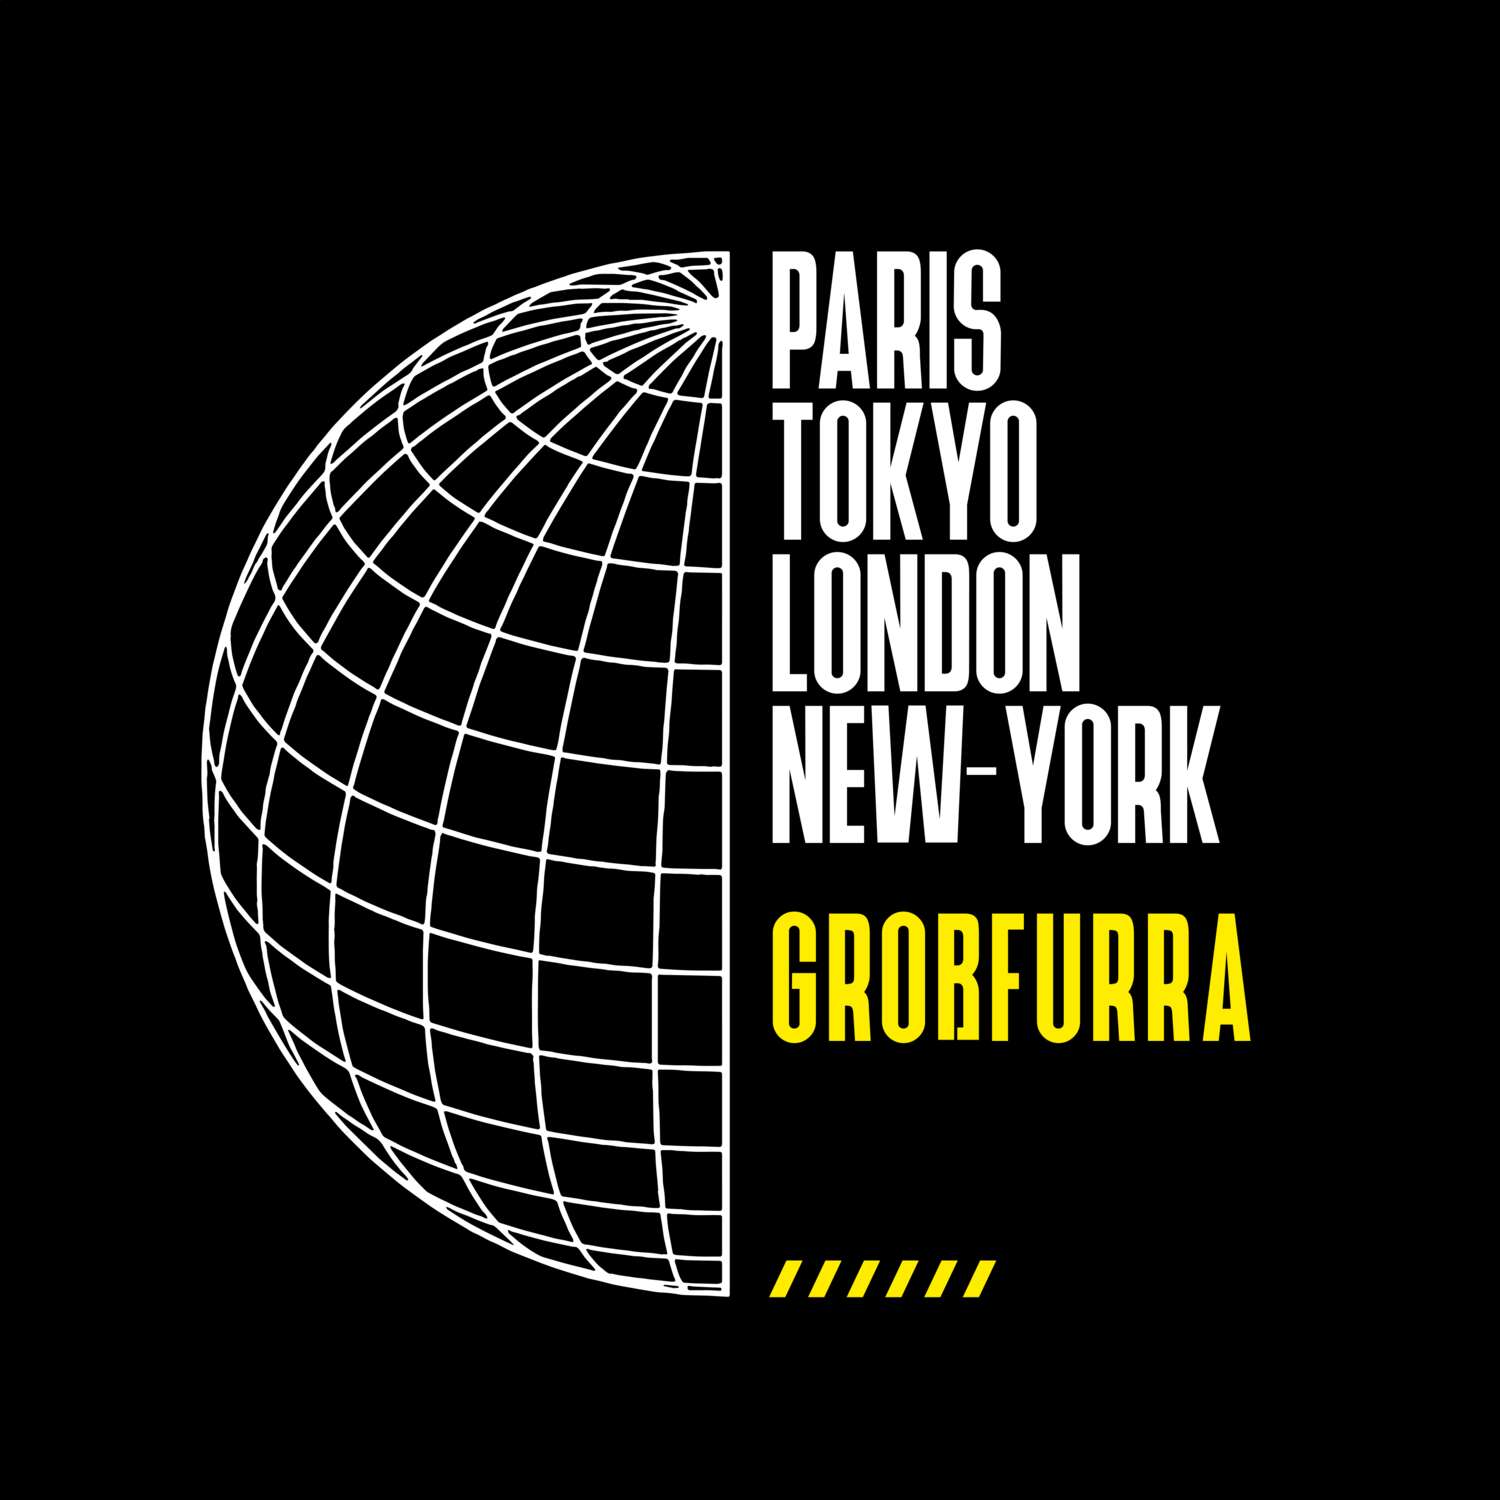 Großfurra T-Shirt »Paris Tokyo London«